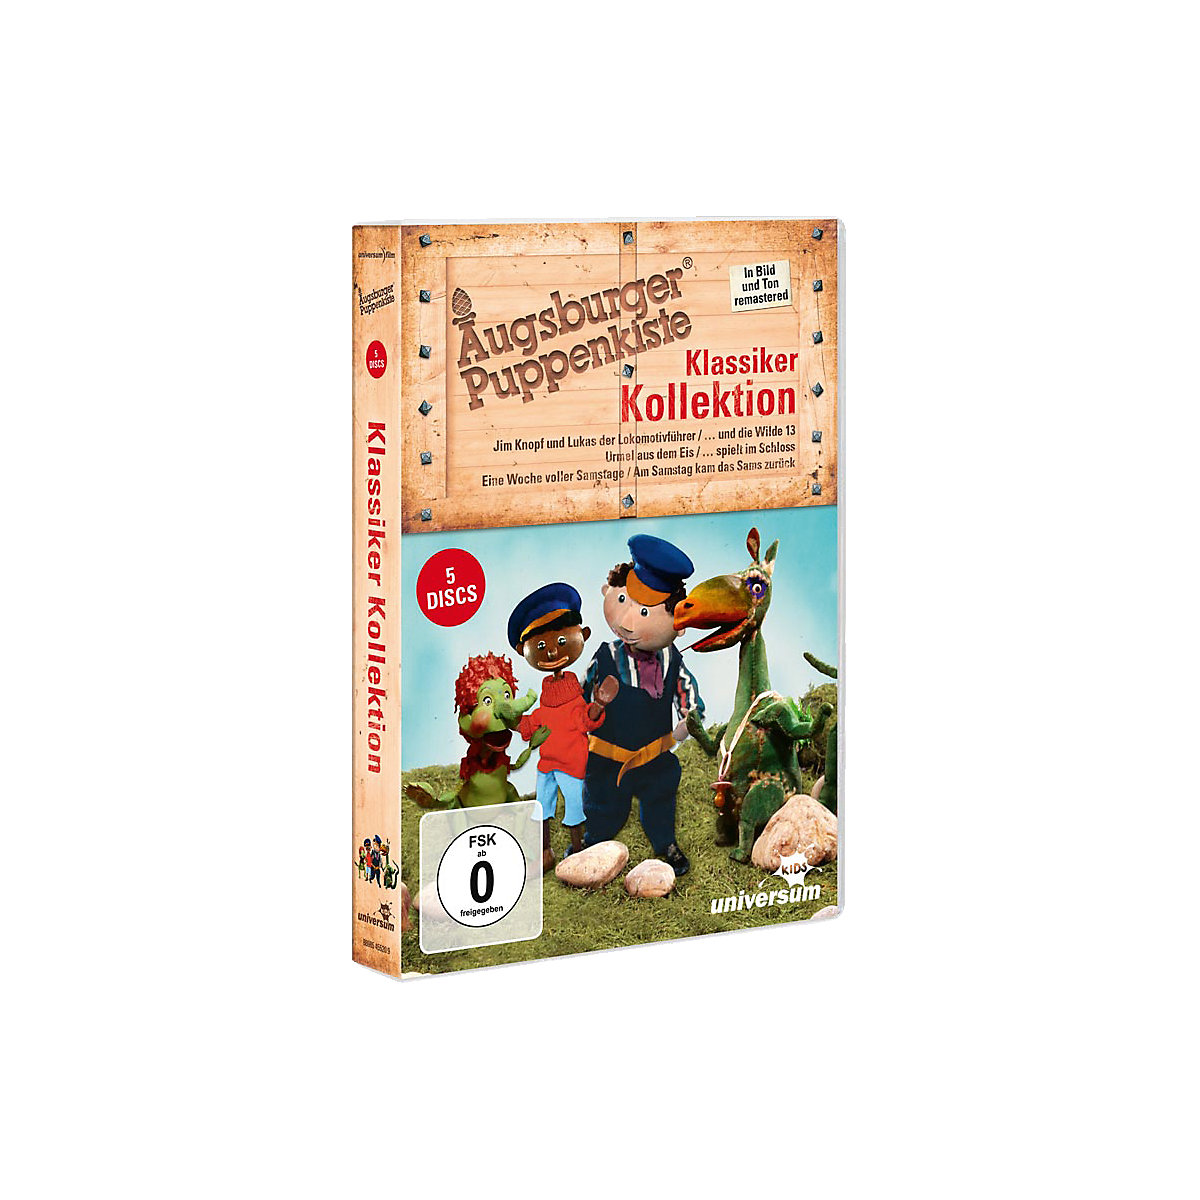 universum DVD Augsburger Puppenkiste Klassiker Kollektion (5 DVDs)